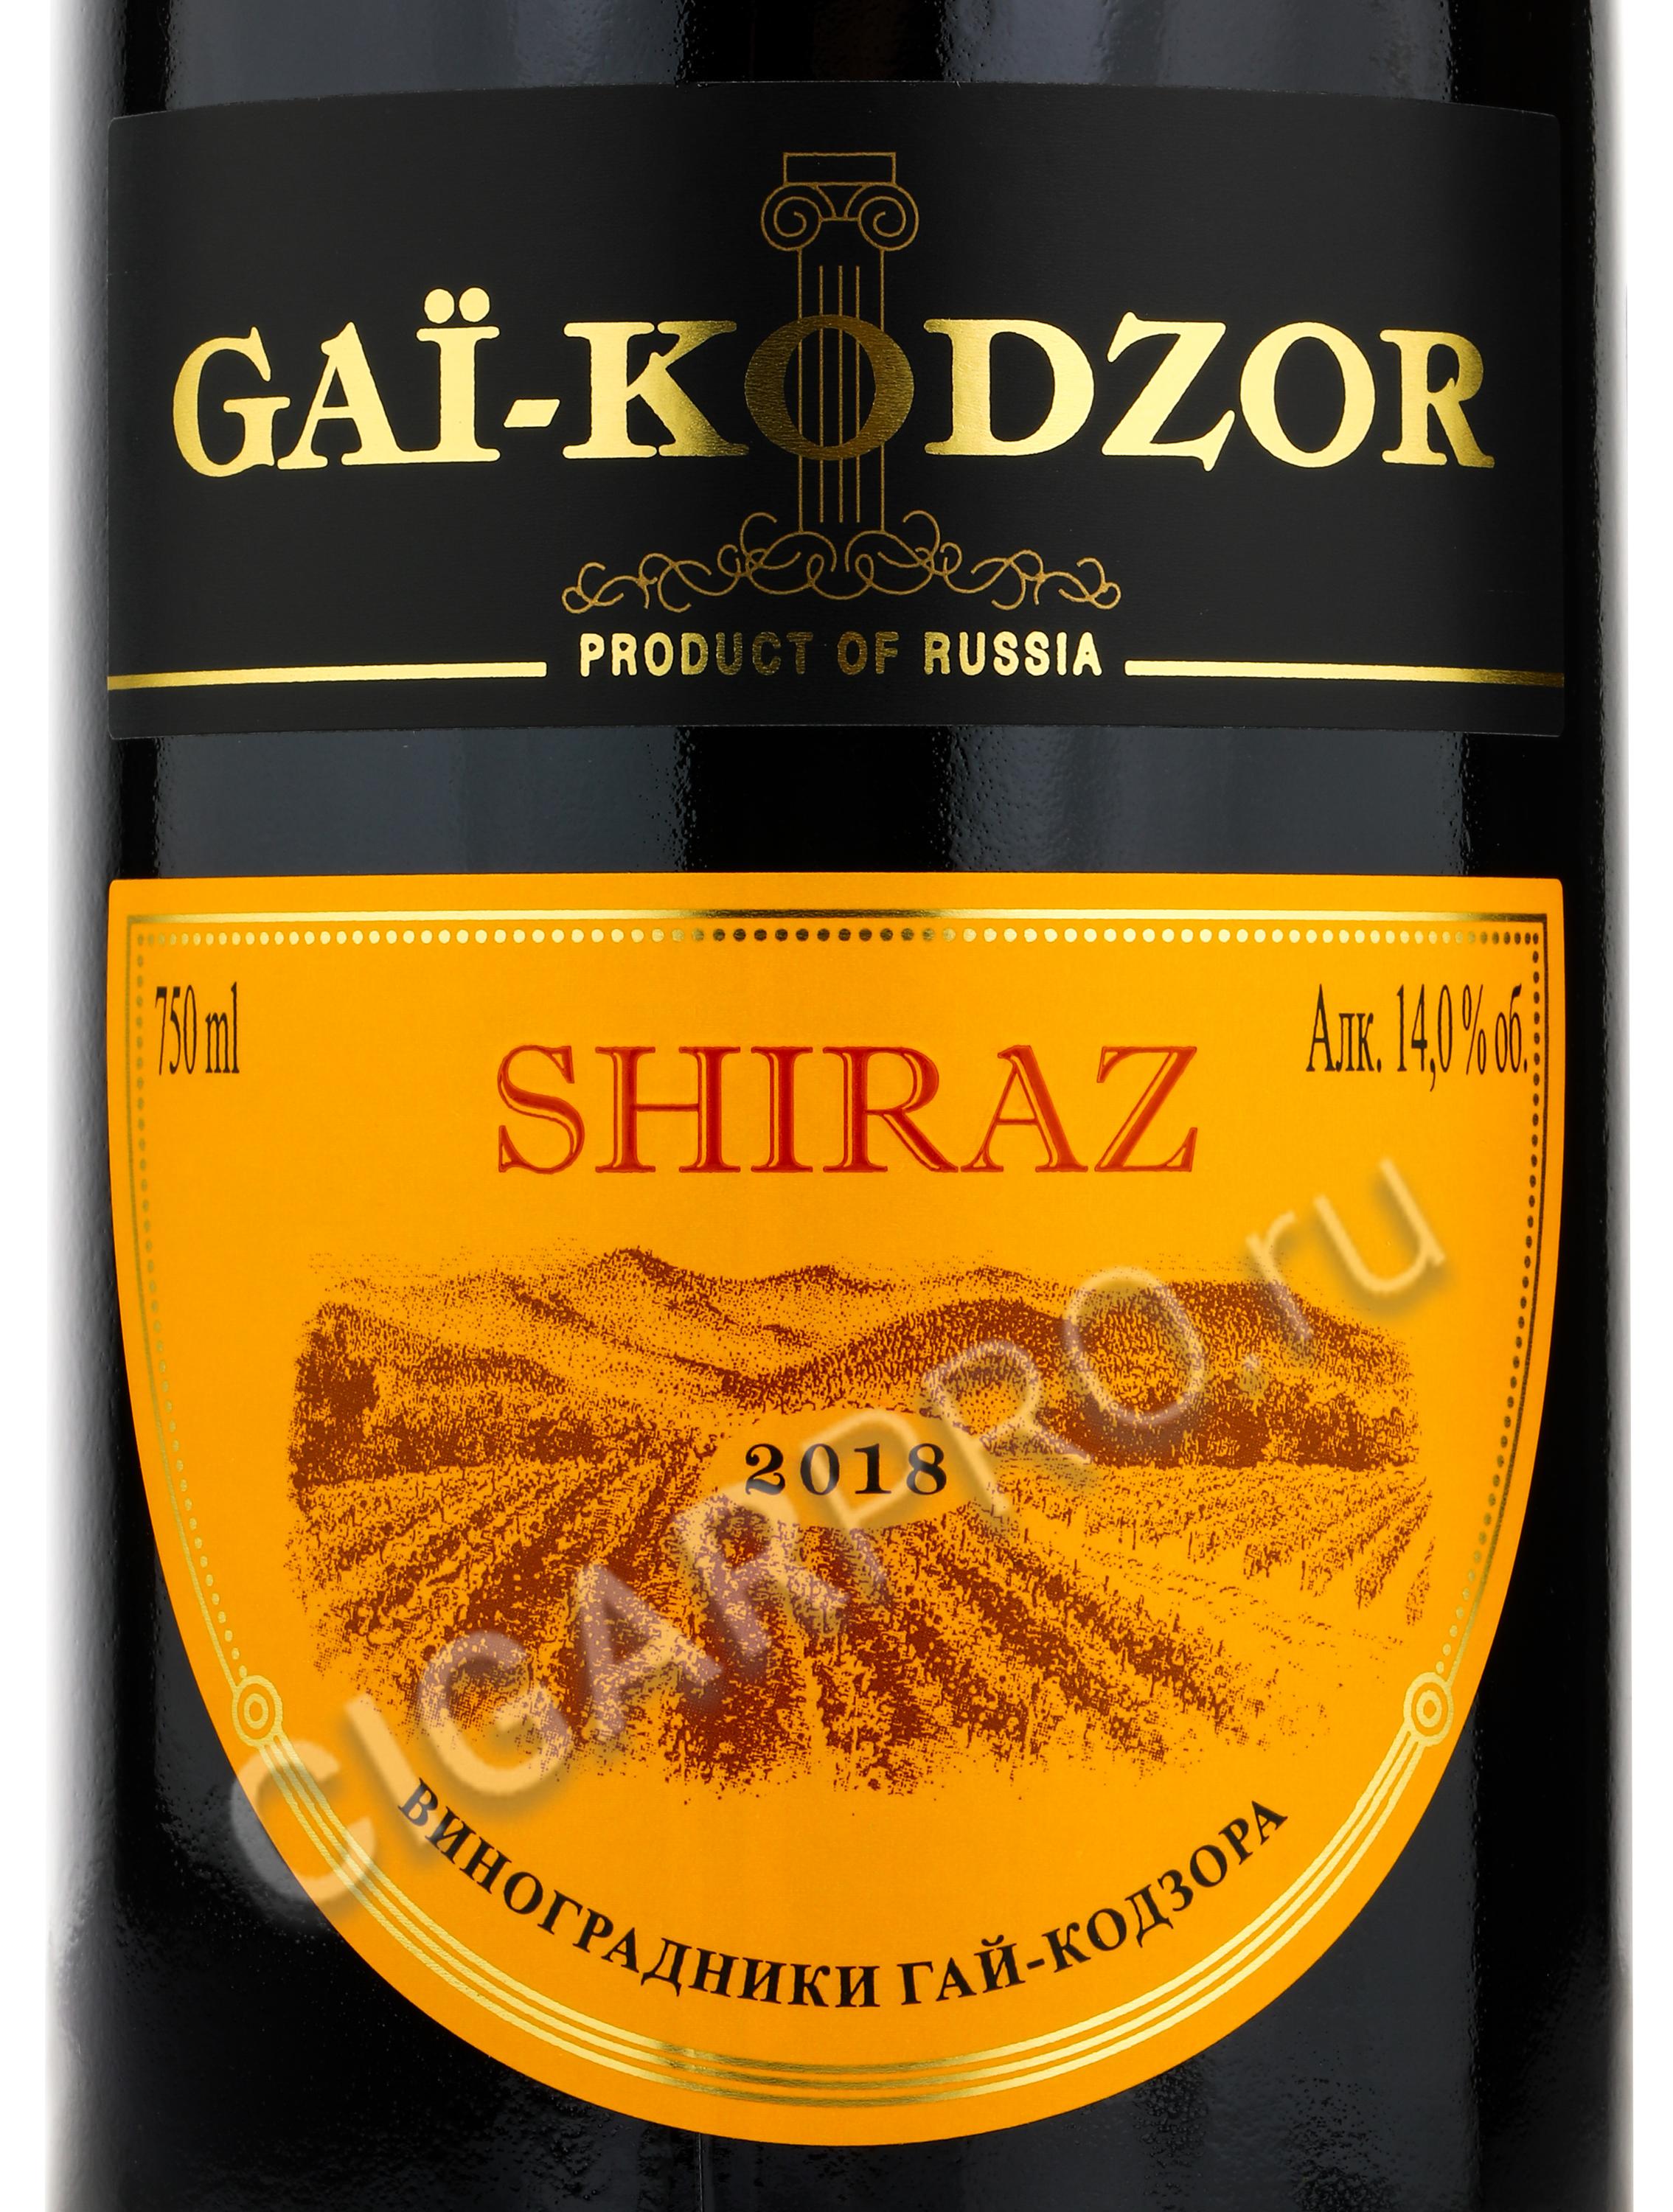 Купить вино гая. Вино gai-Kodzor Shiraz 0.75 л.